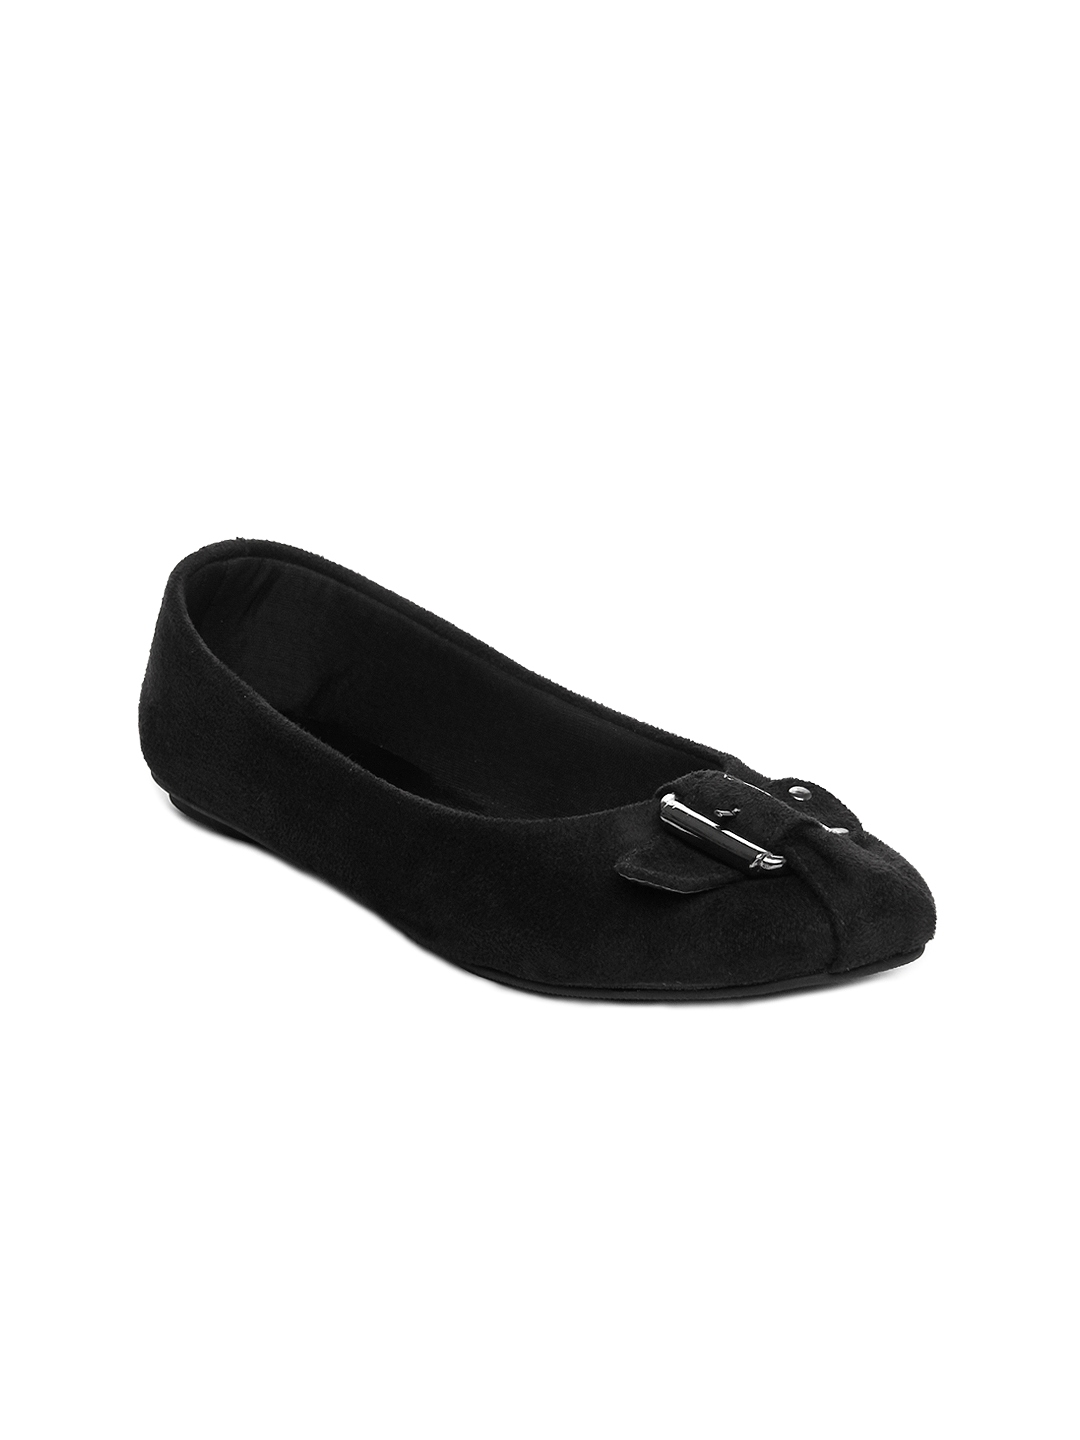 Buy Global Step Women Black Flat Shoes 